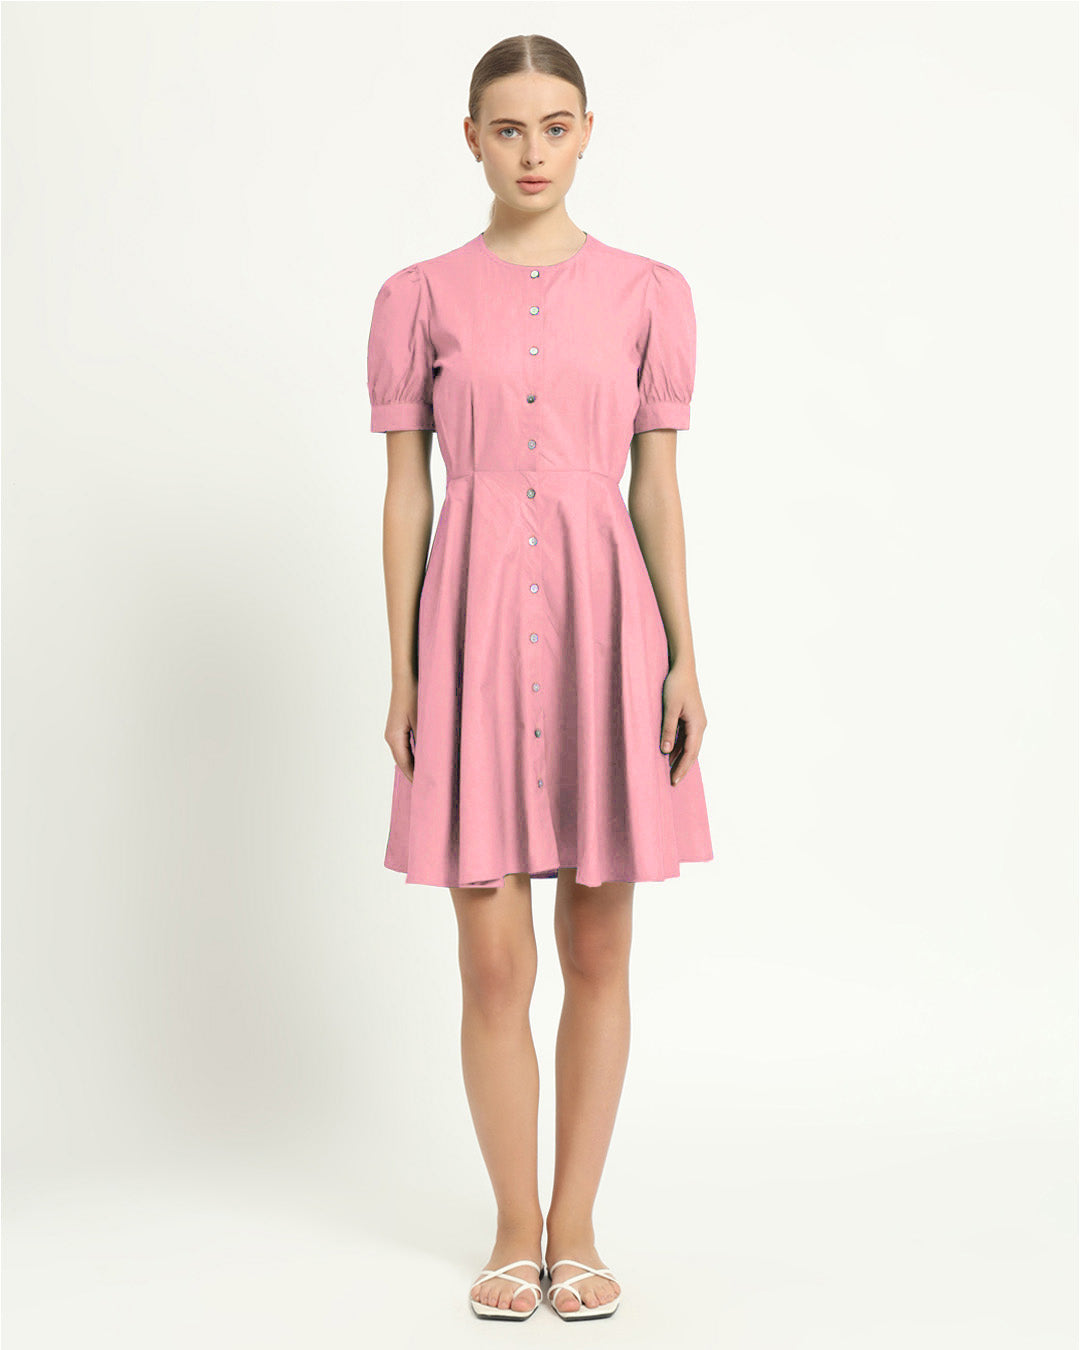 The Kittsee Fondant Pink Cotton Dress